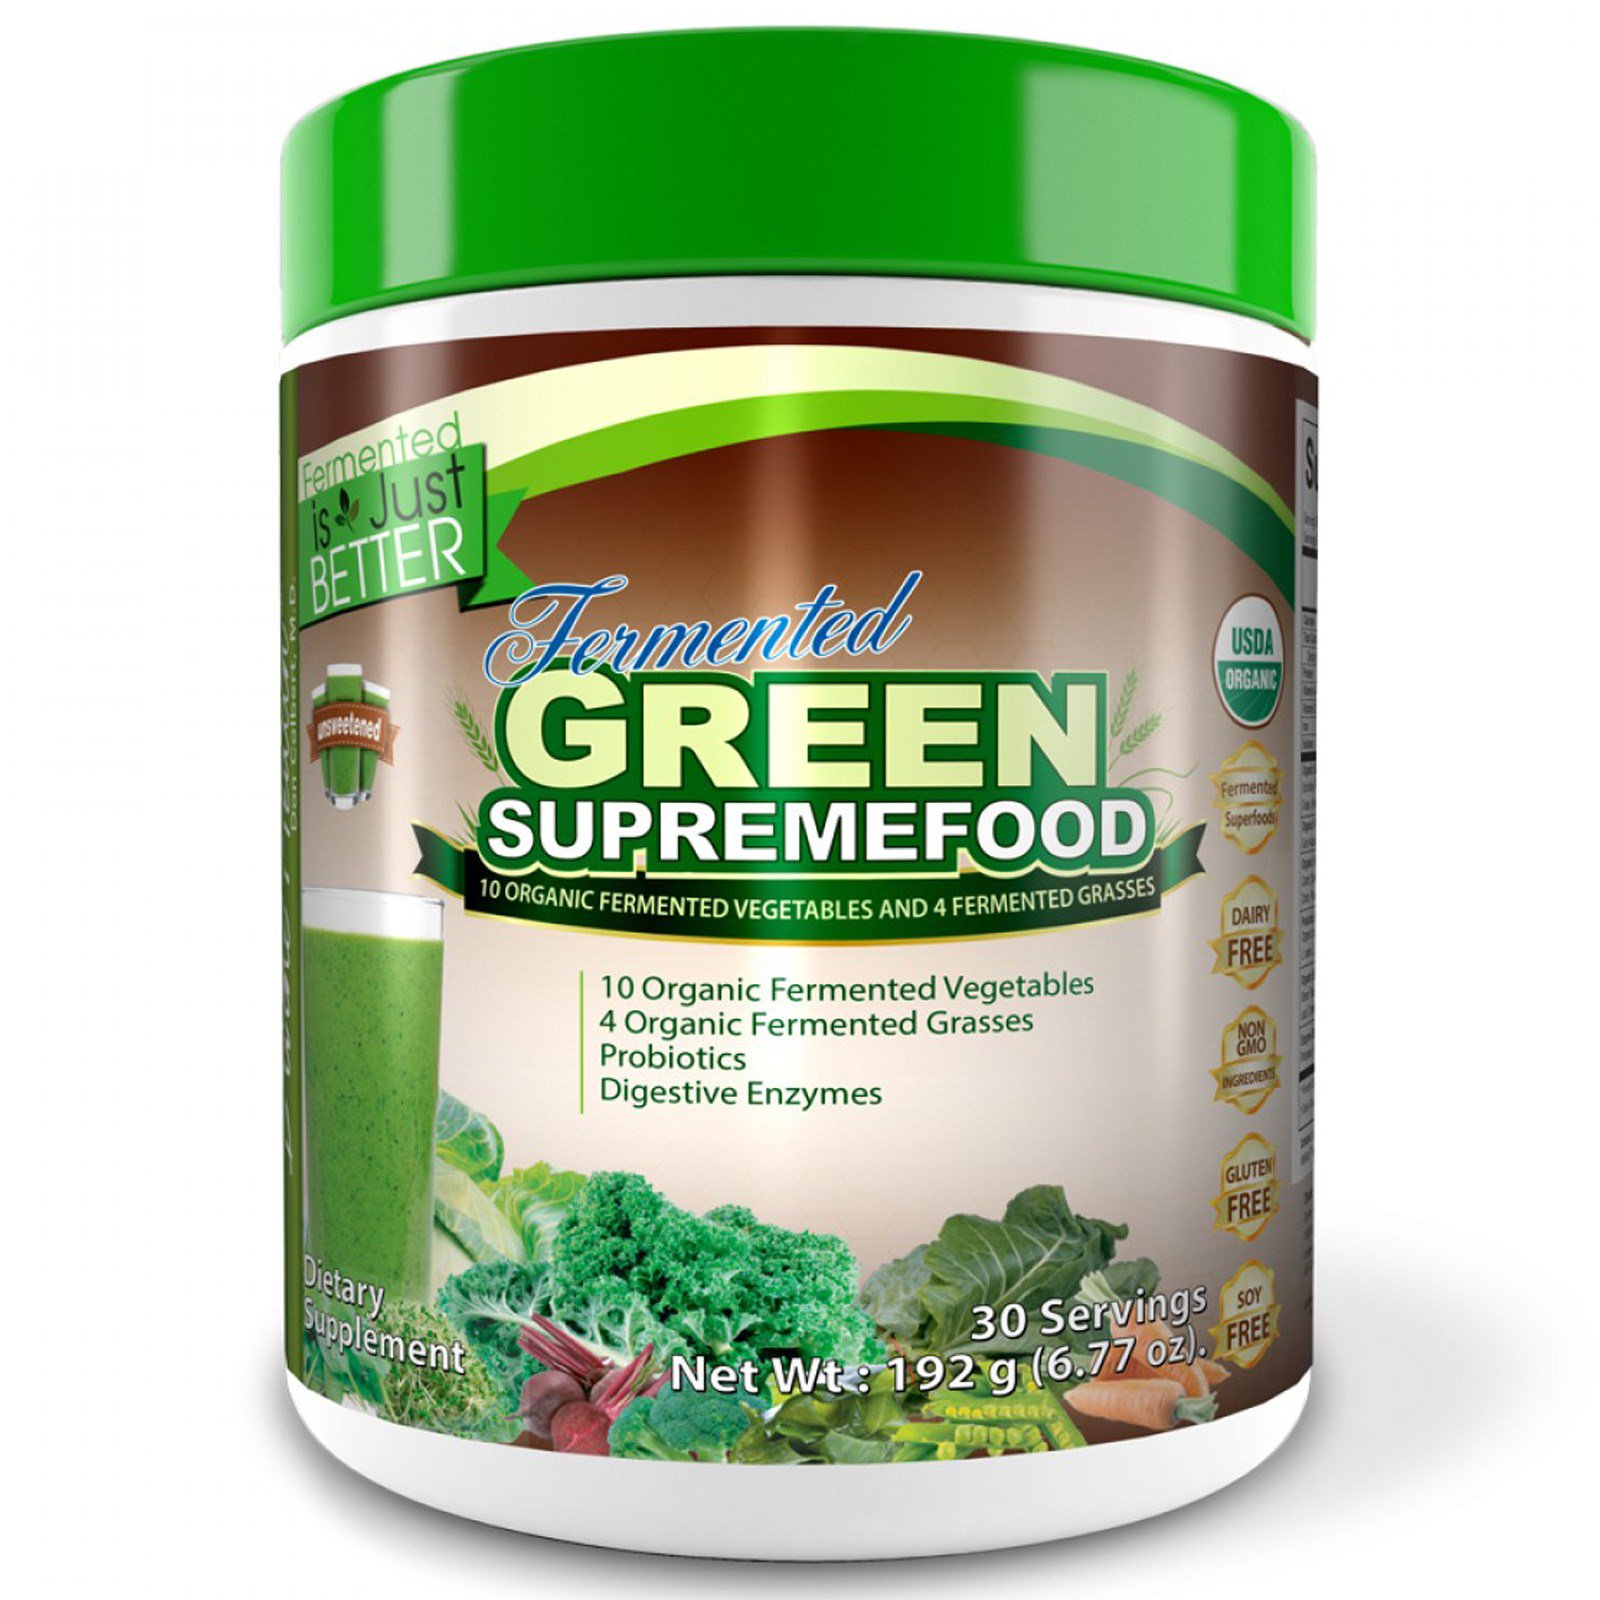 Divine Health, Ферментированная зеленая Supremefood, без подсластителей, 6,77 унц. (192 г) (Discontinued Item)